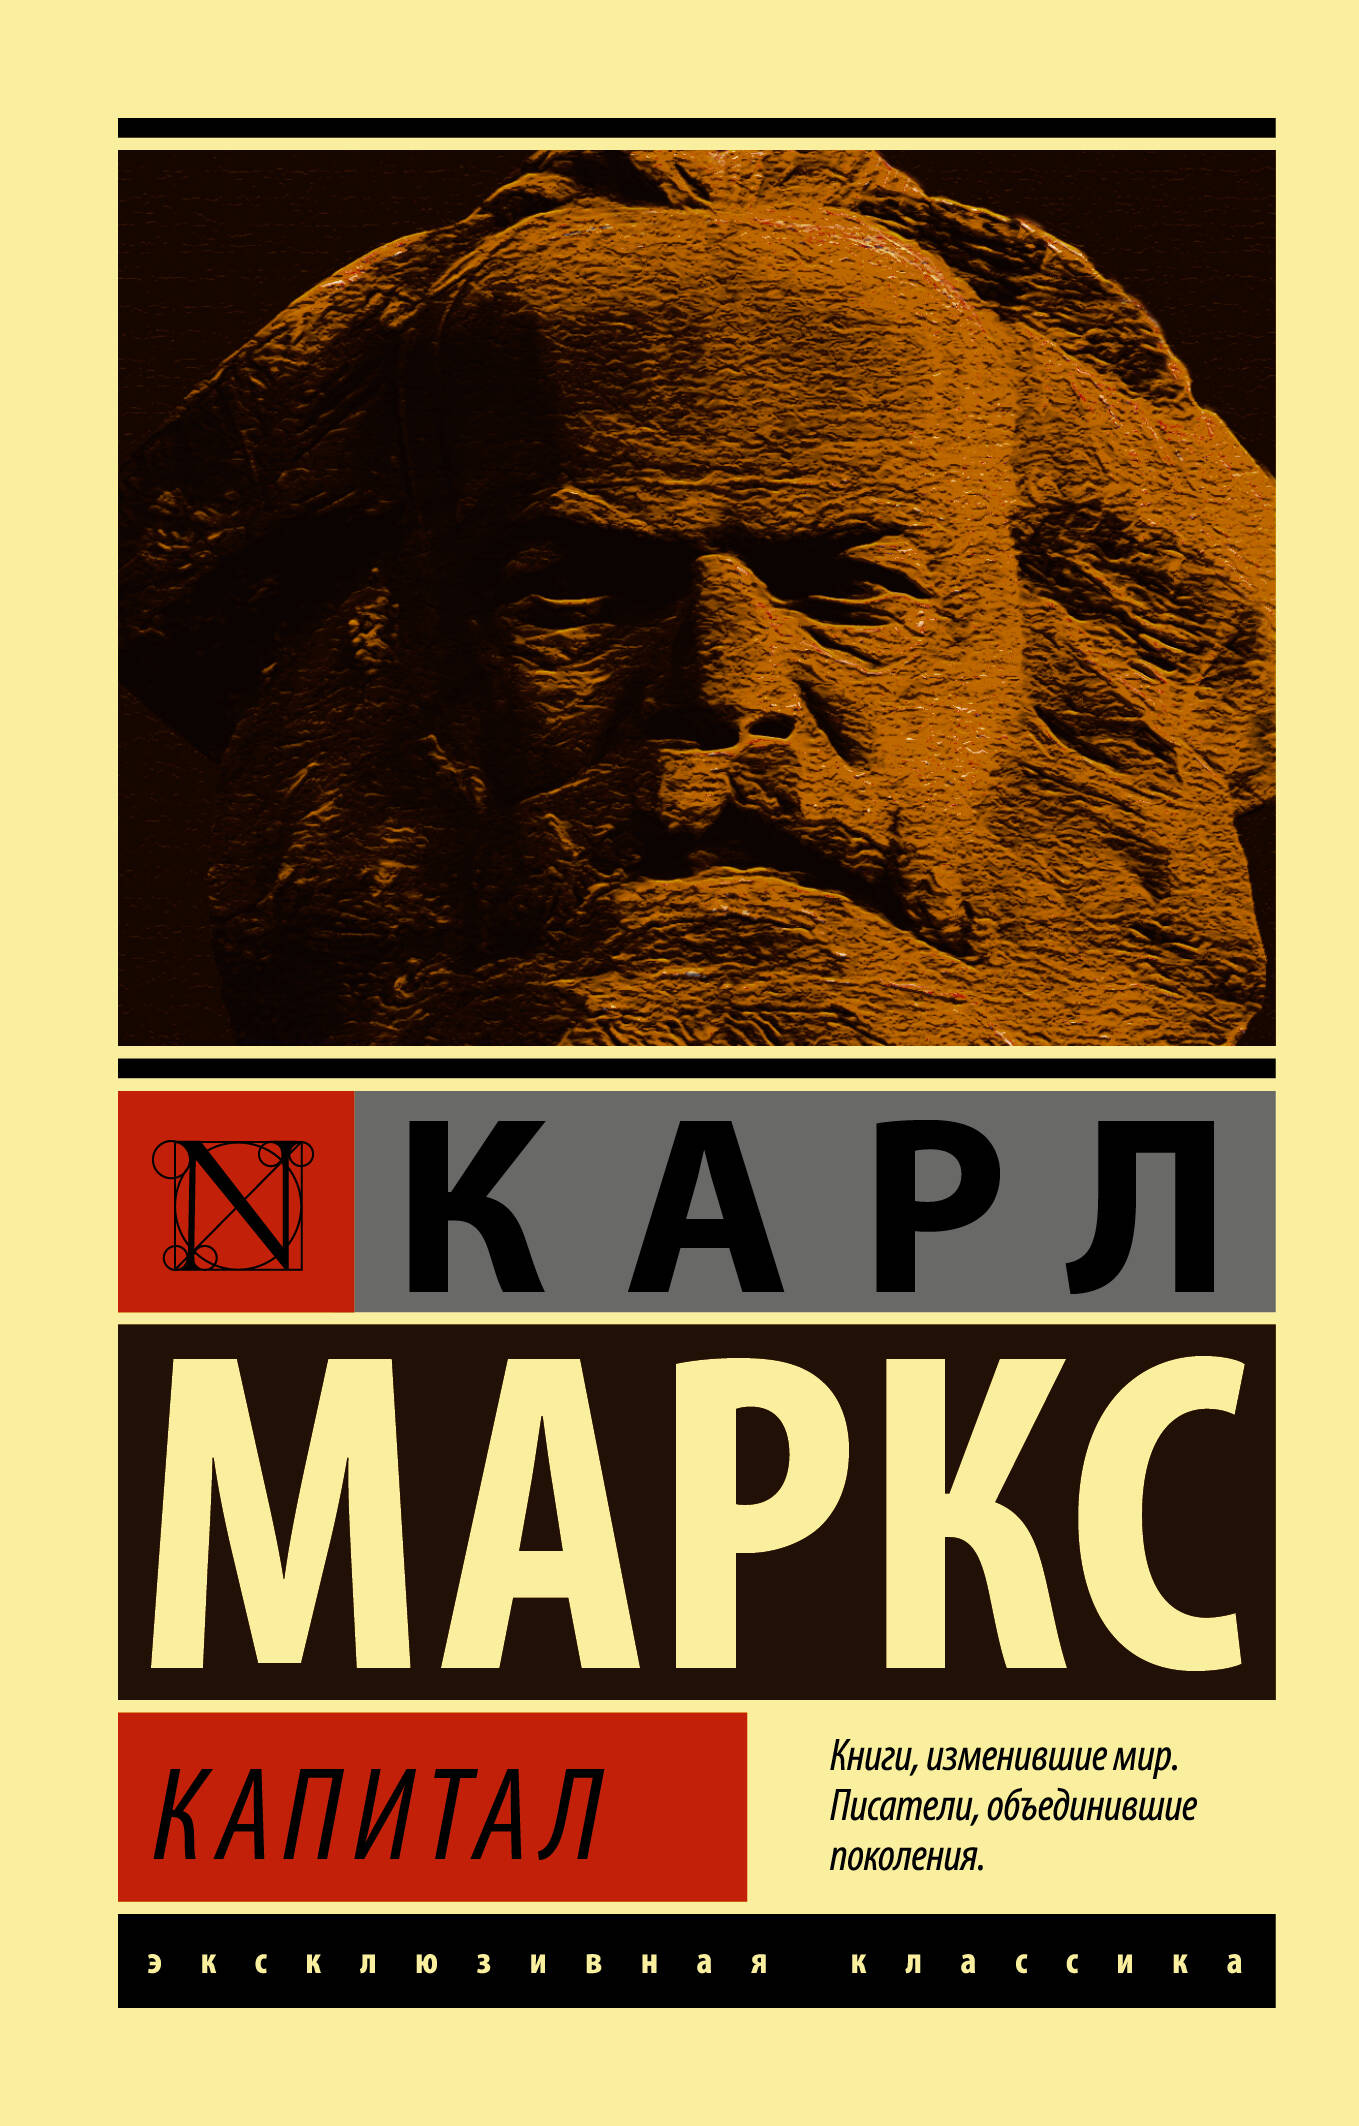 Маркс Карл Генрих Капитал маркс карл генрих восемнадцатое брюмера луи бонапарта